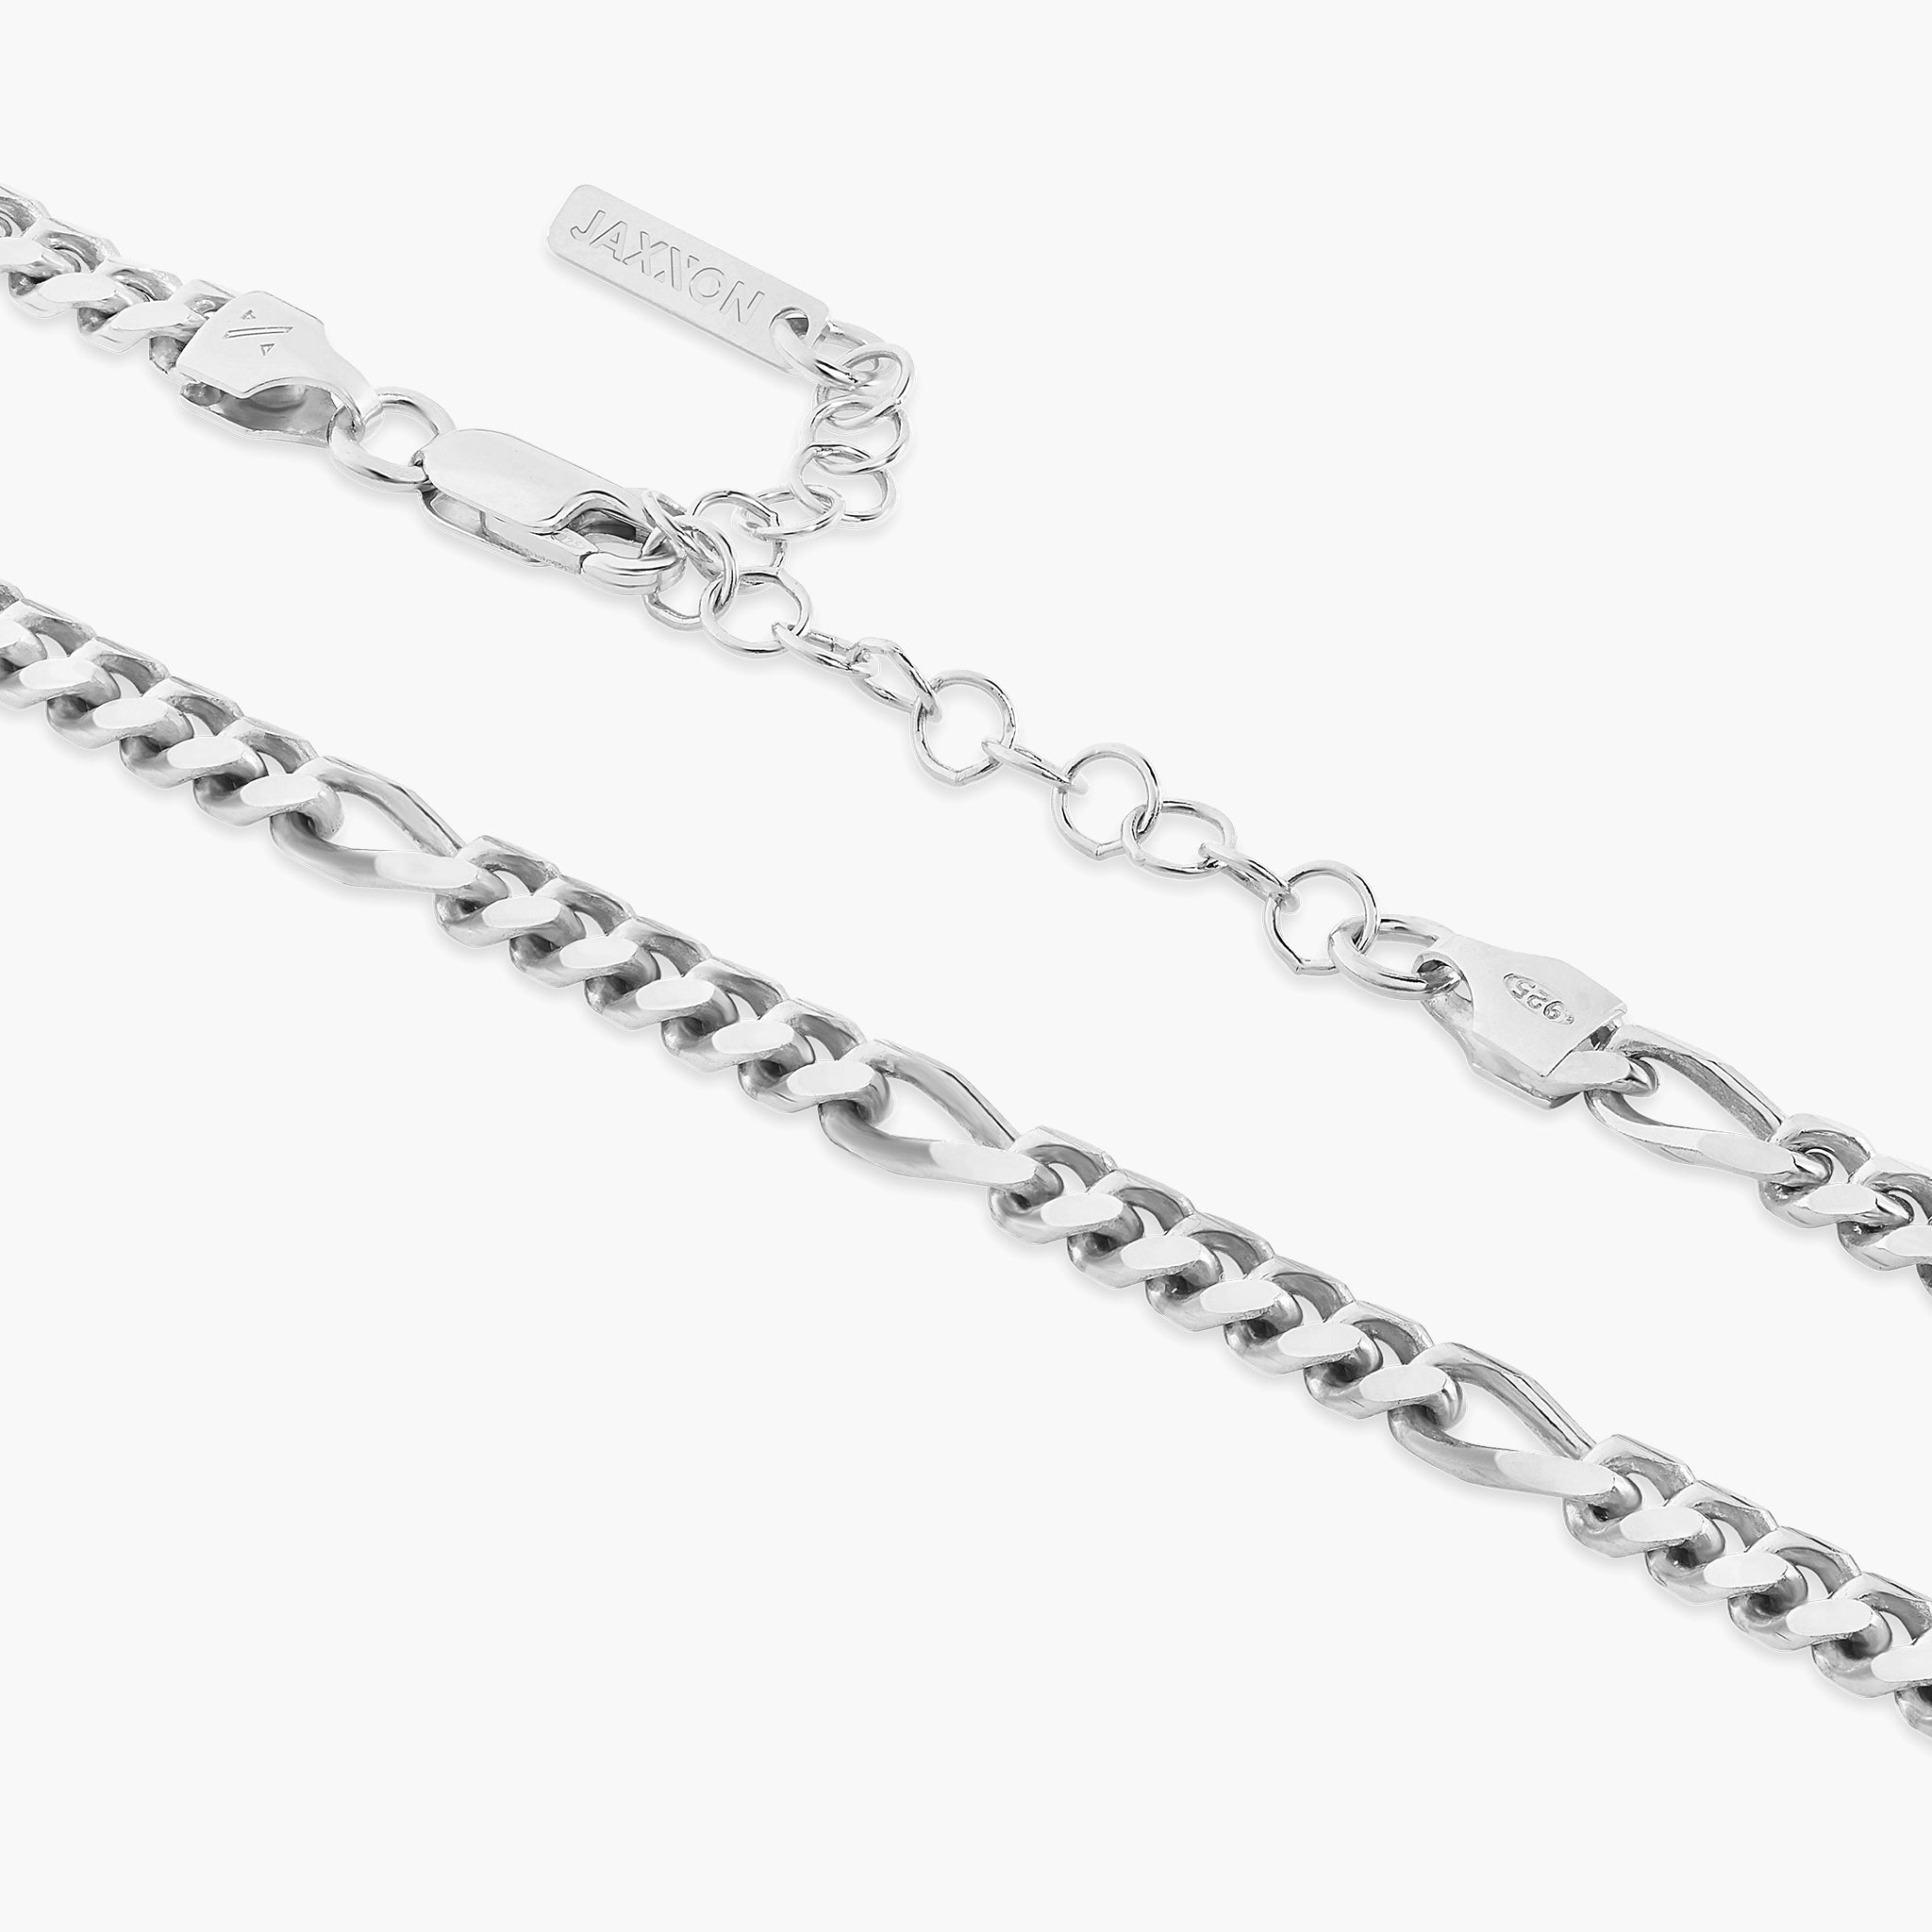 JAXXON 8mm Figaro Silver Bracelet | 8